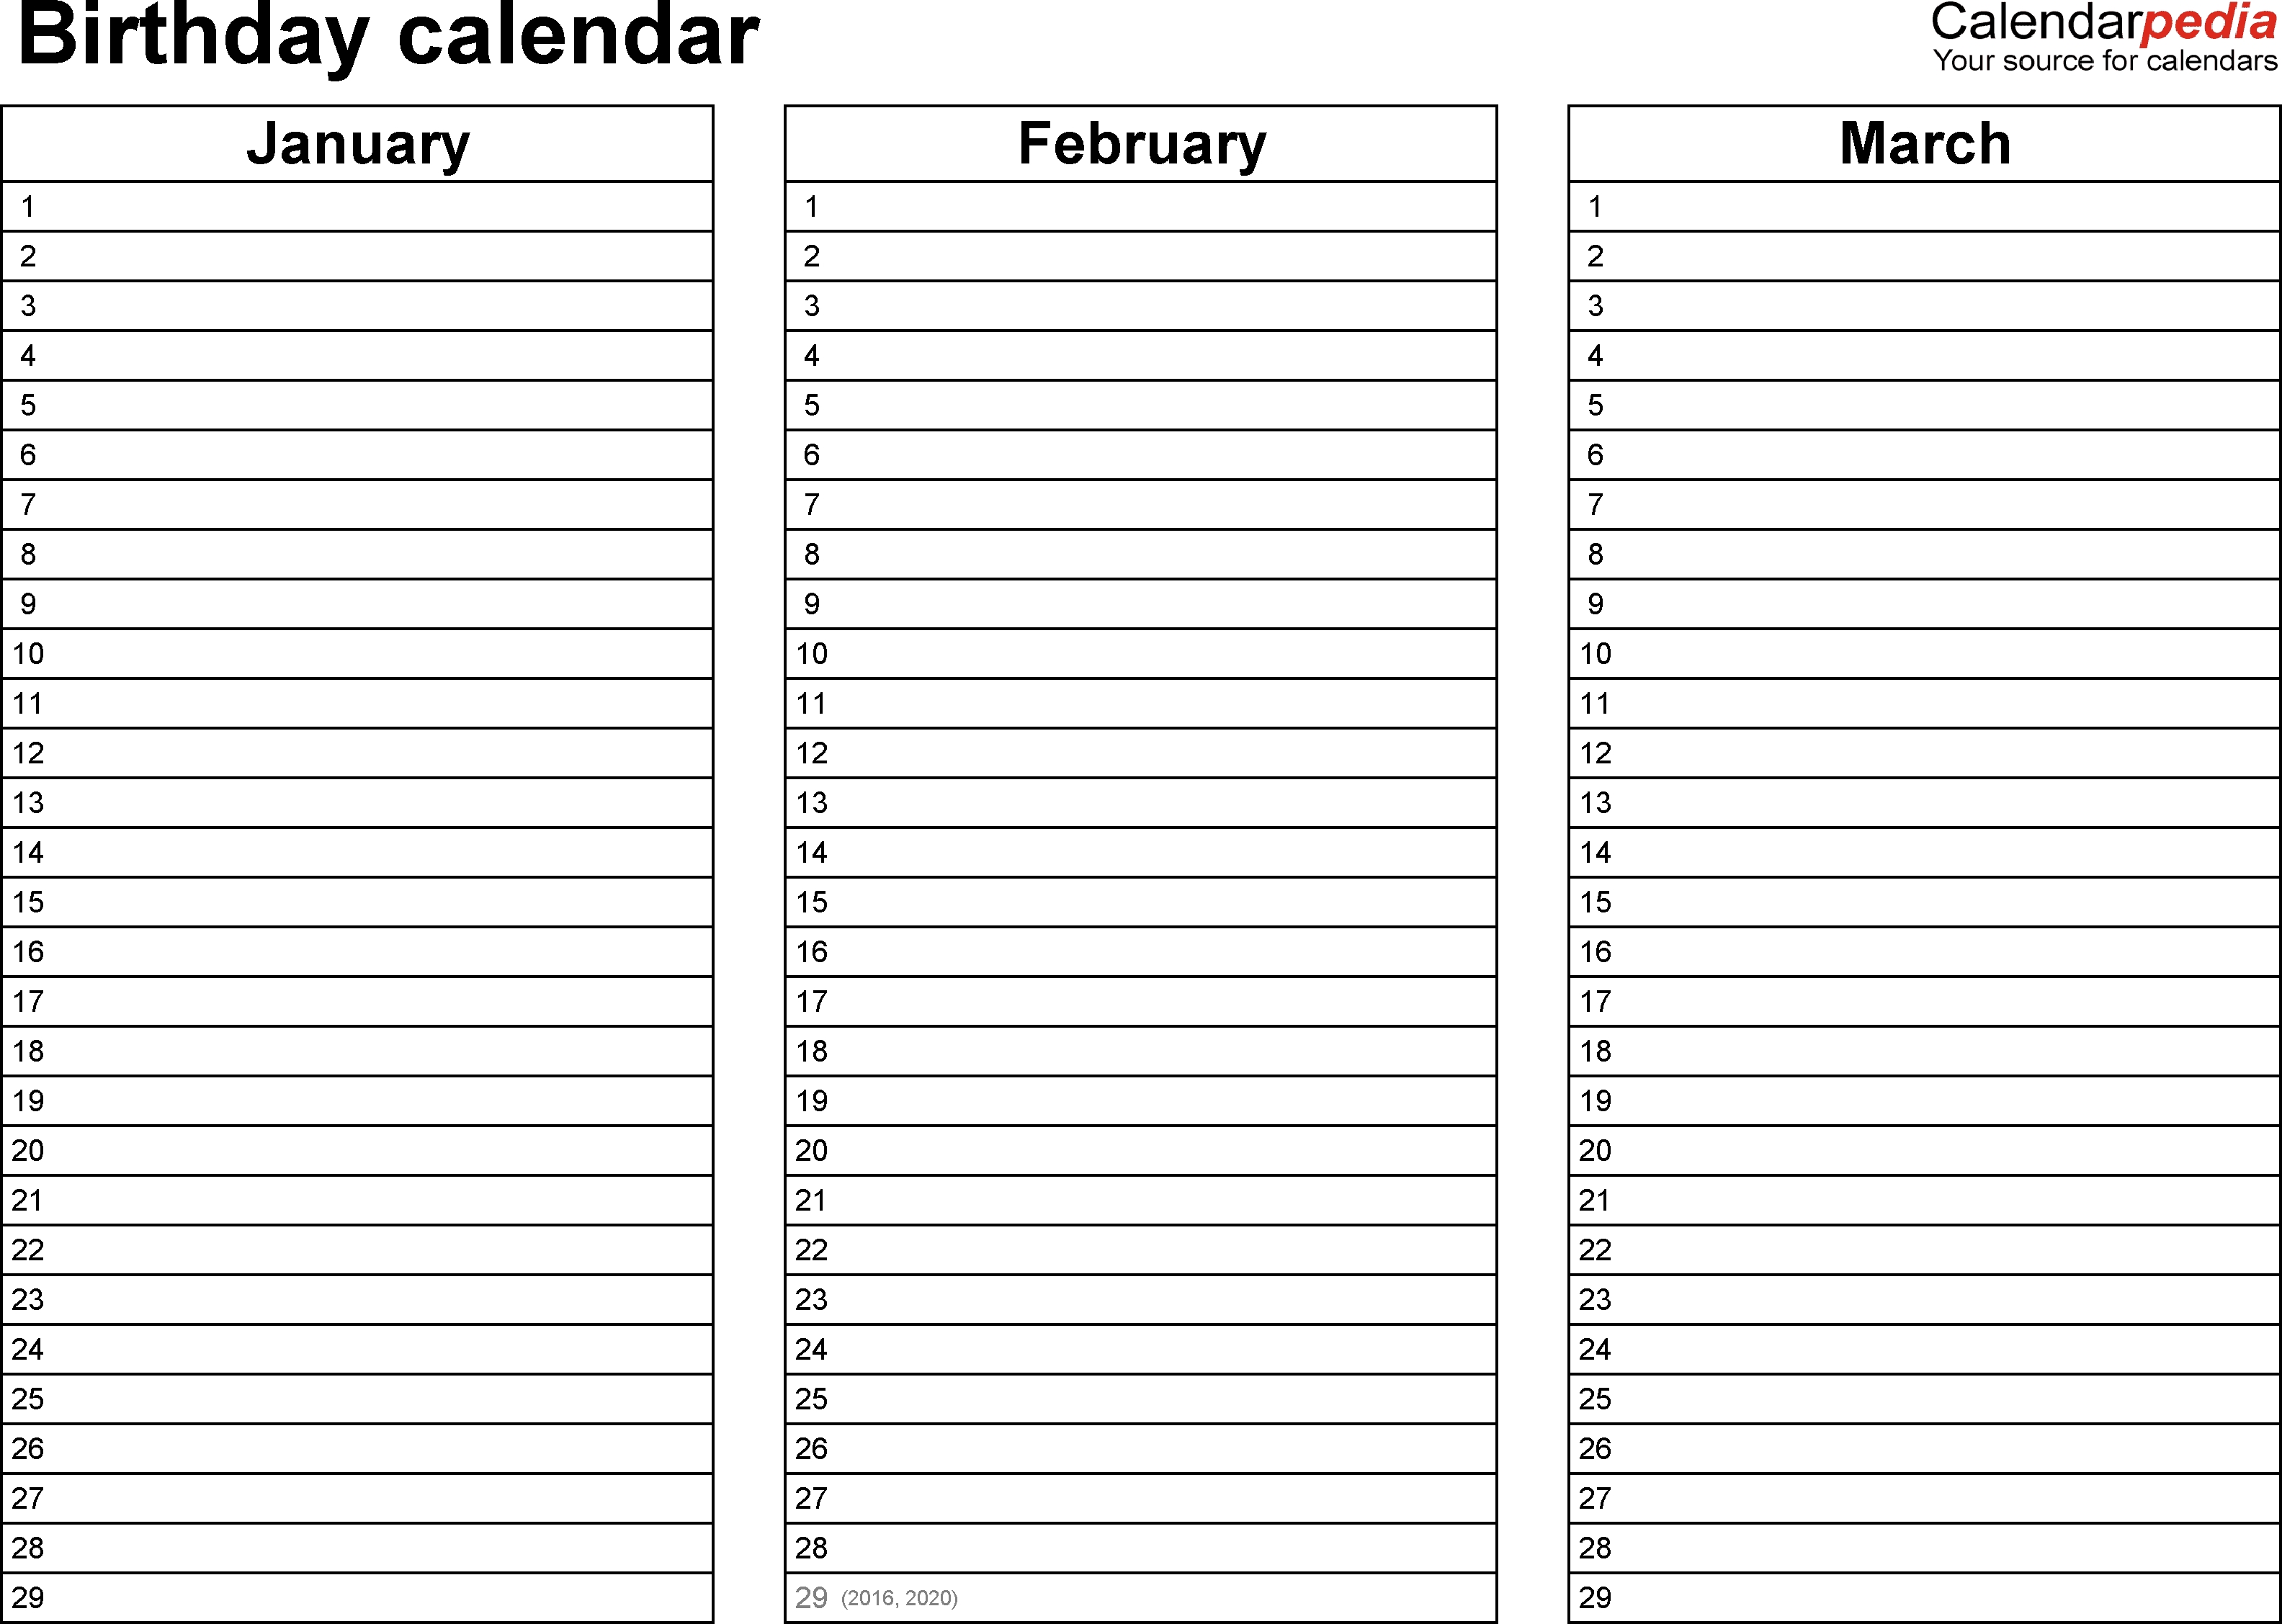 Birthday Calendars - 7 Free Printable Word Templates Calendar Month View Printable